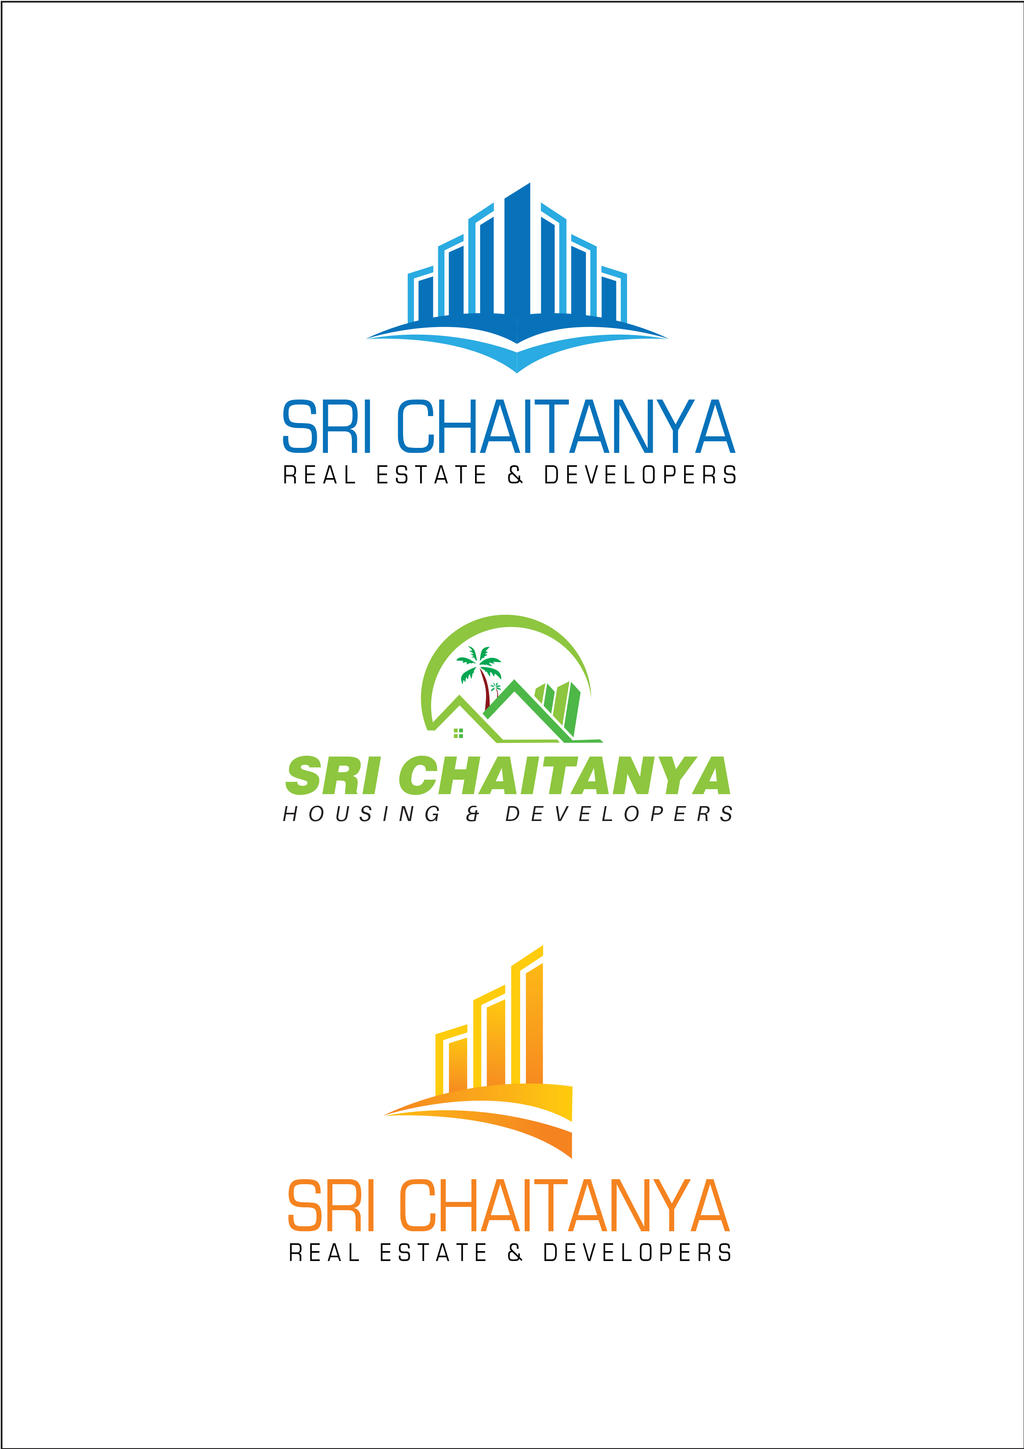 Sri Chaitanya Real Estate Logos by srinumdh on DeviantArt